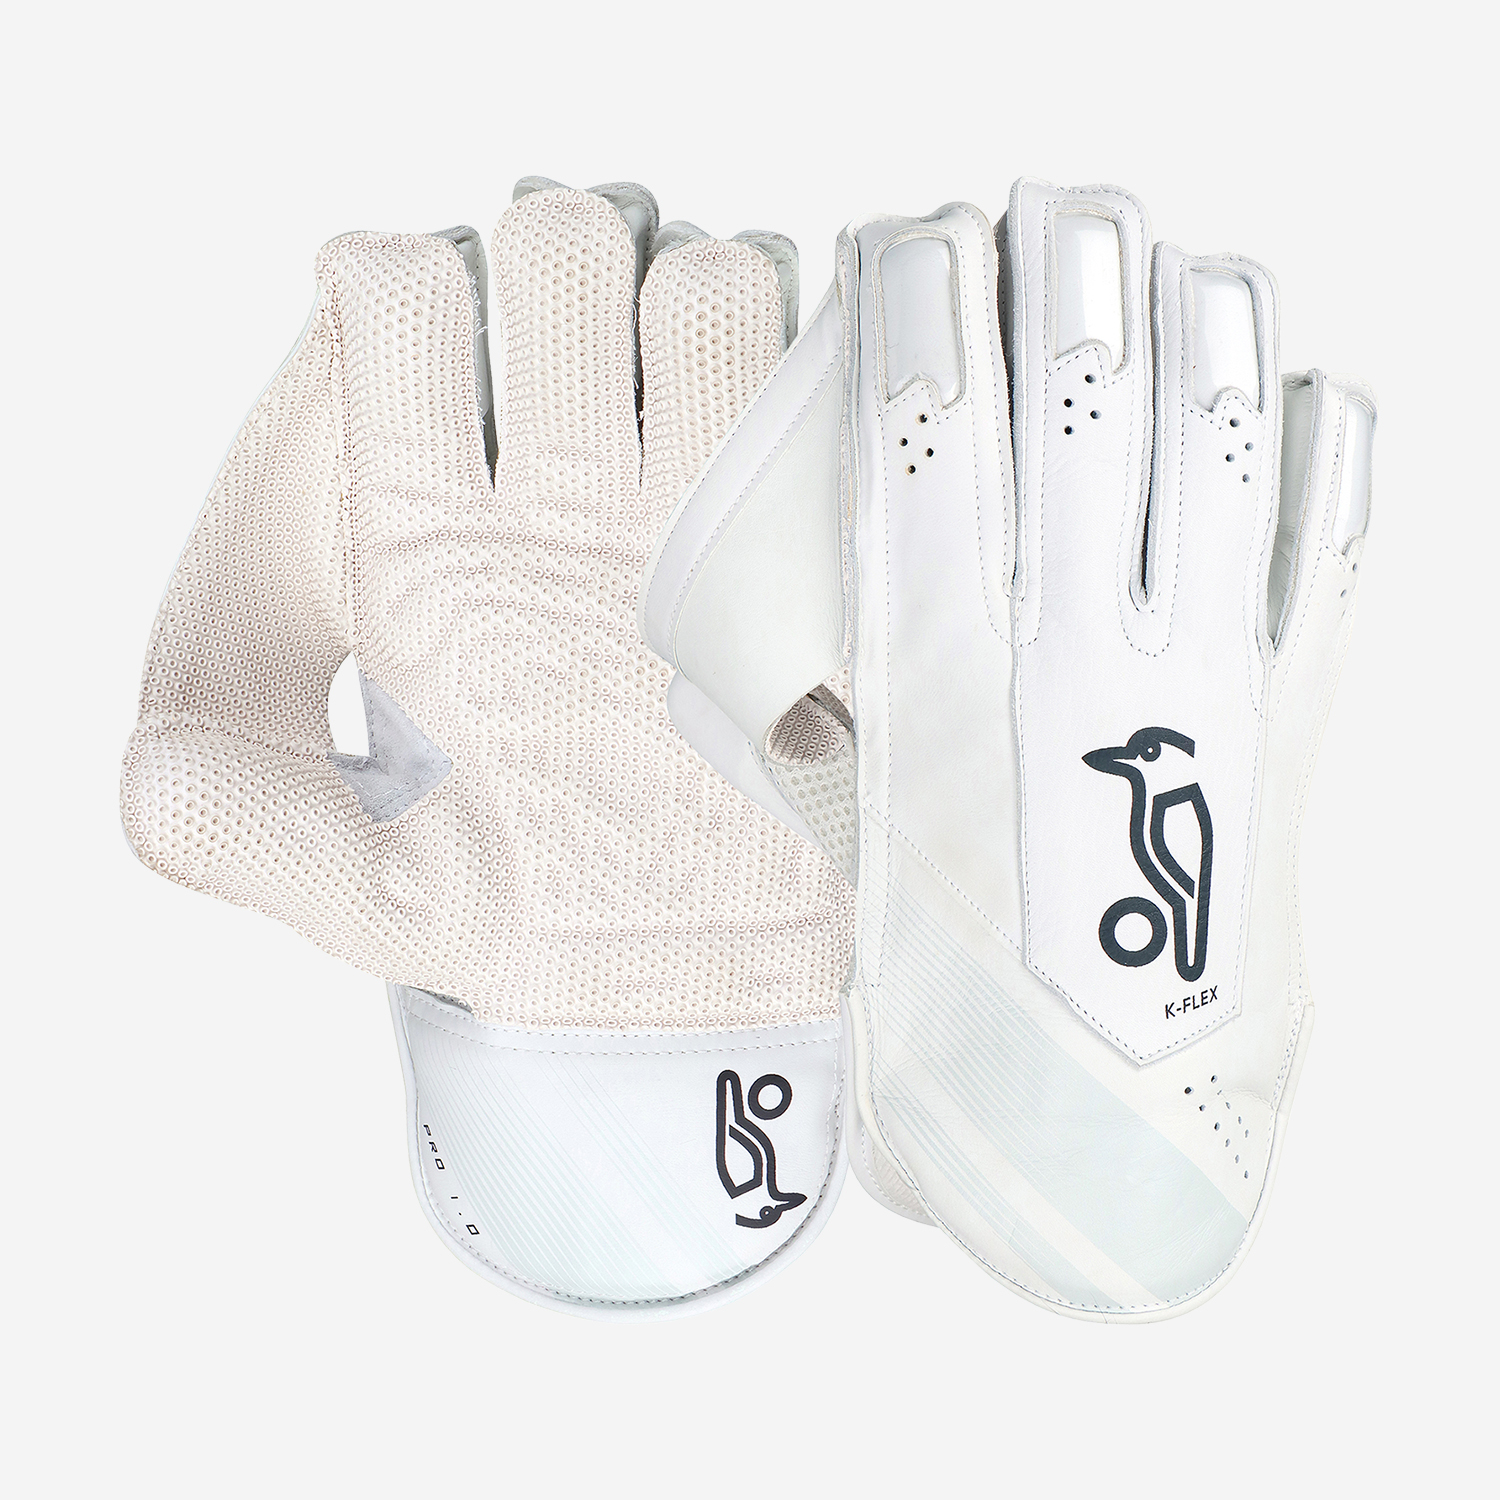 Pro 1.0 Wicket Keeping Gloves